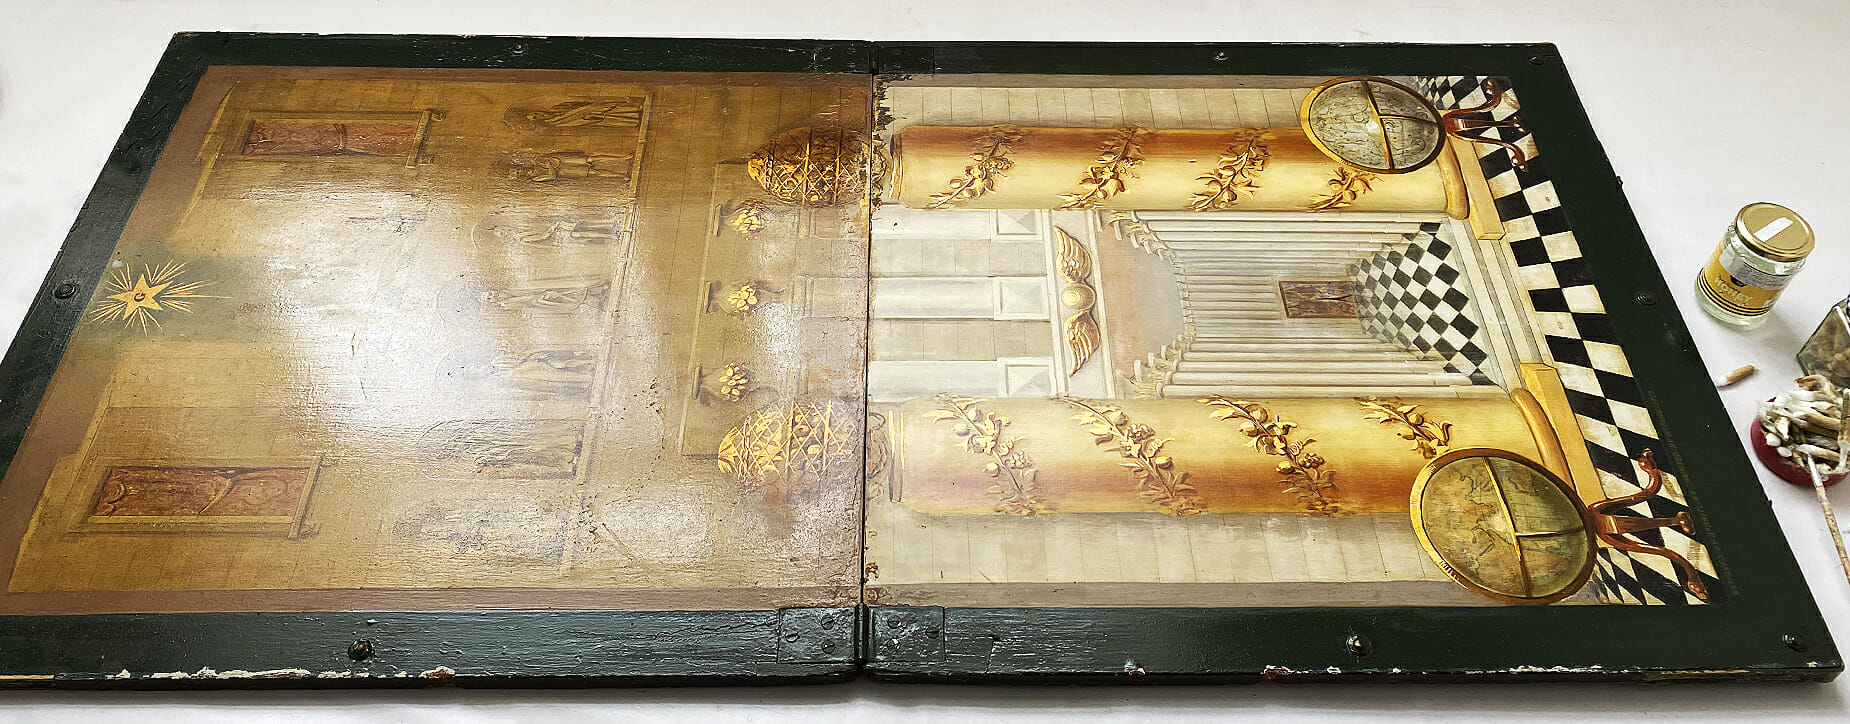 Masonic tracing board restoration progress